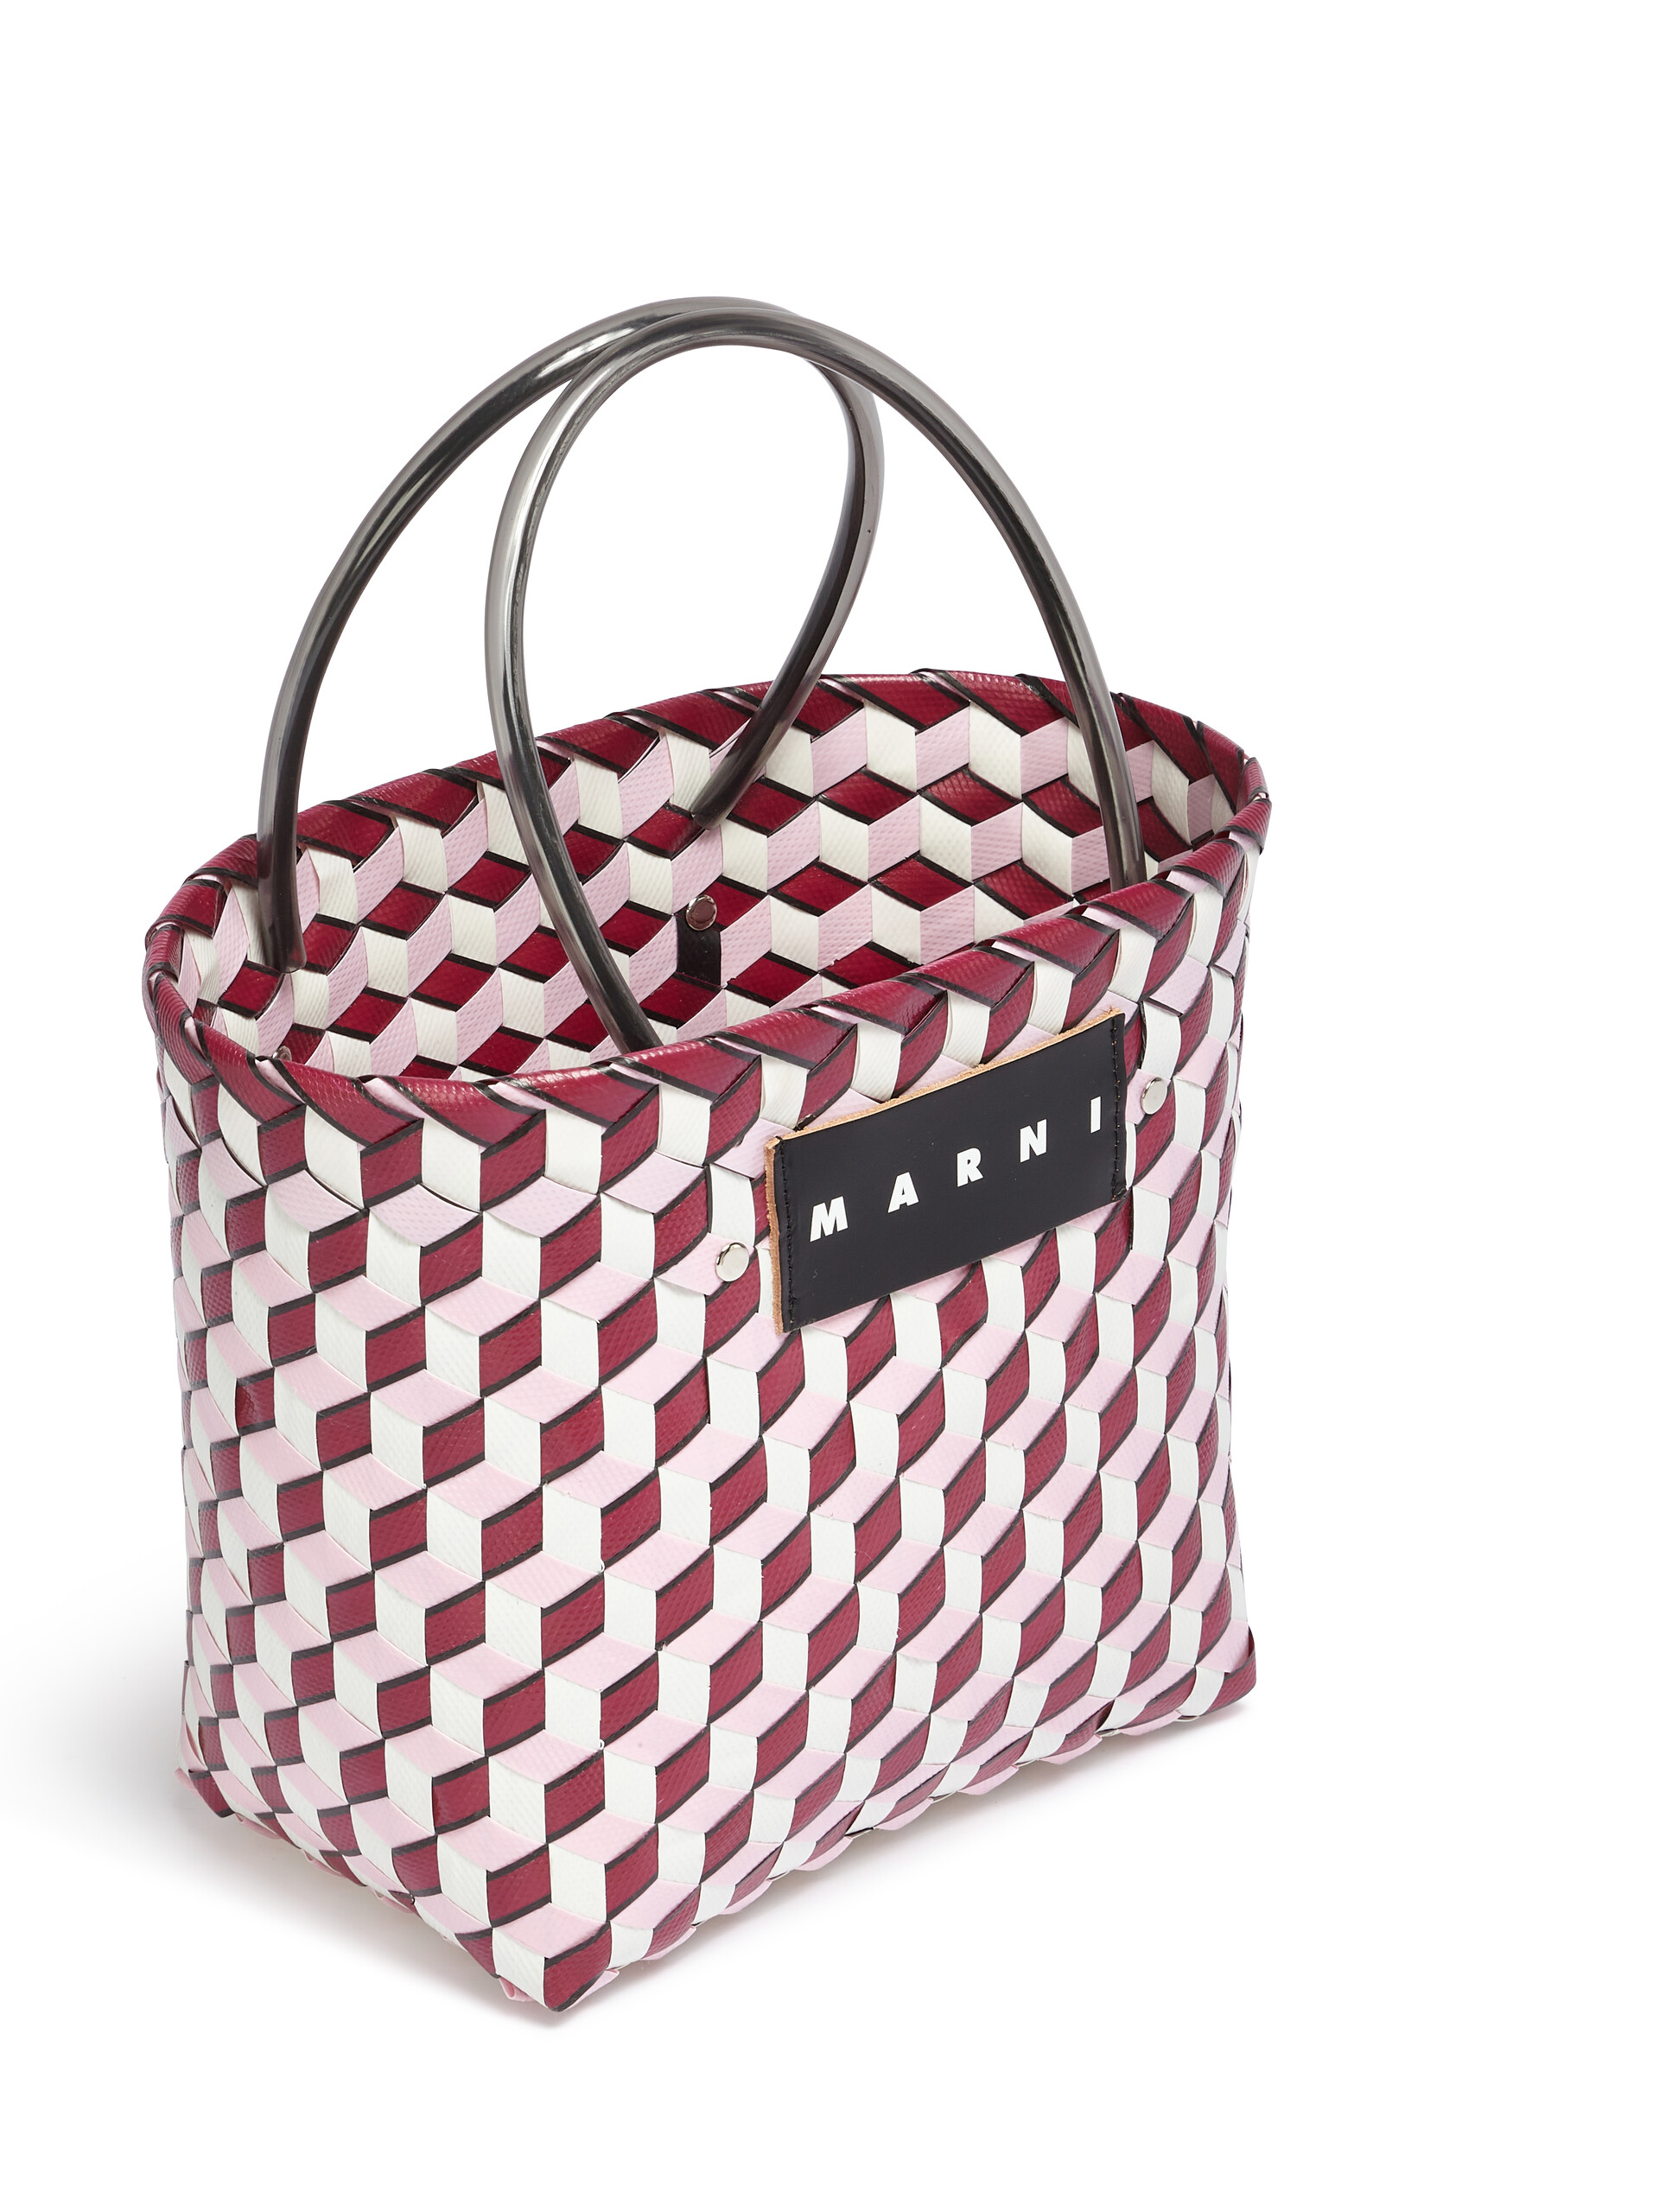 MARNI MARKET bag in burgundy cube woven material - Bags - Image 4